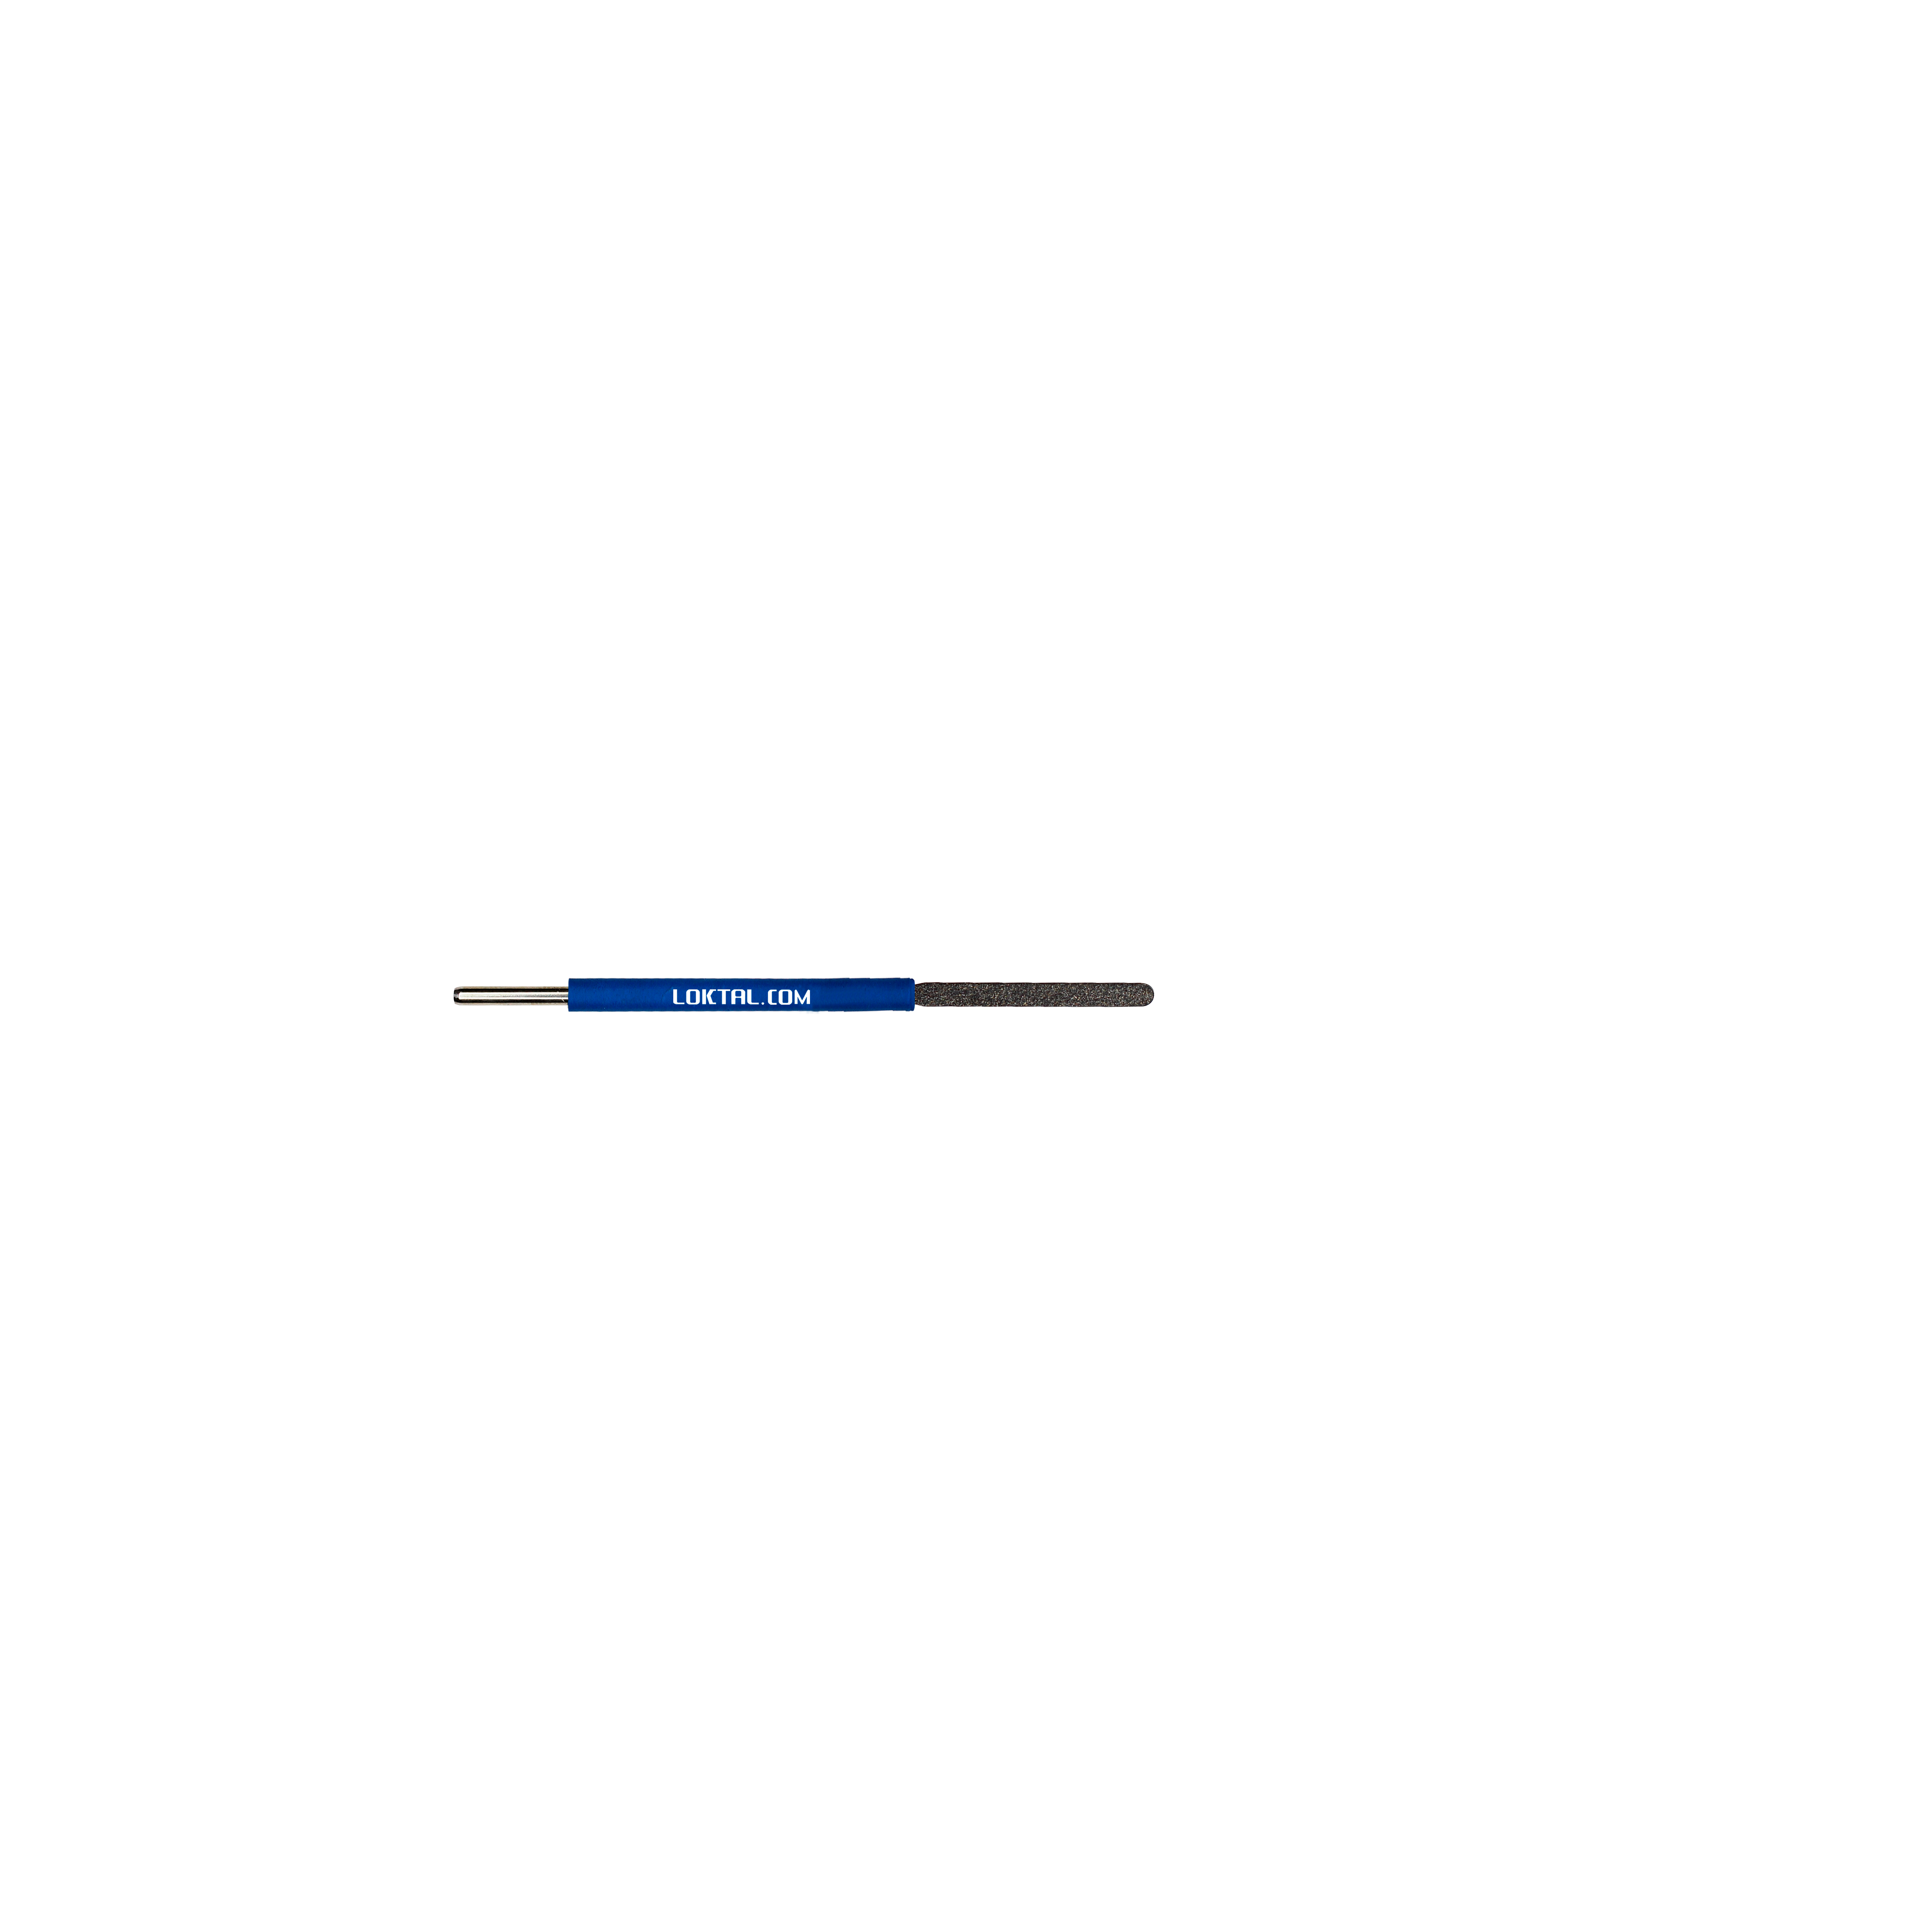 ACEL0269 - Eletrodo Eletrocirúrgico Faca, Reto